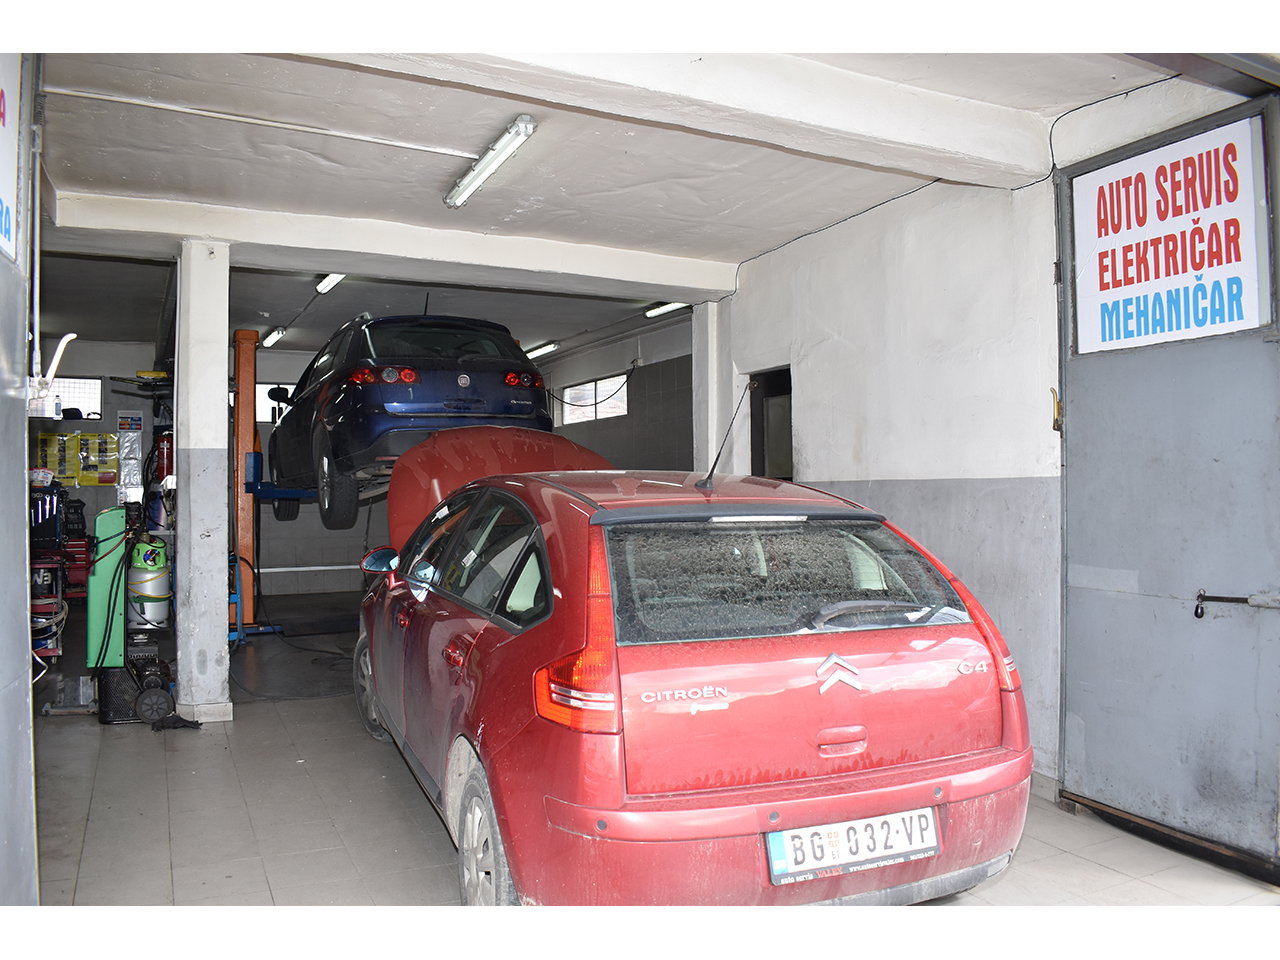 CAR SERVICE ELECTRICS MECHANICS TOWING MANE Car electricians Beograd